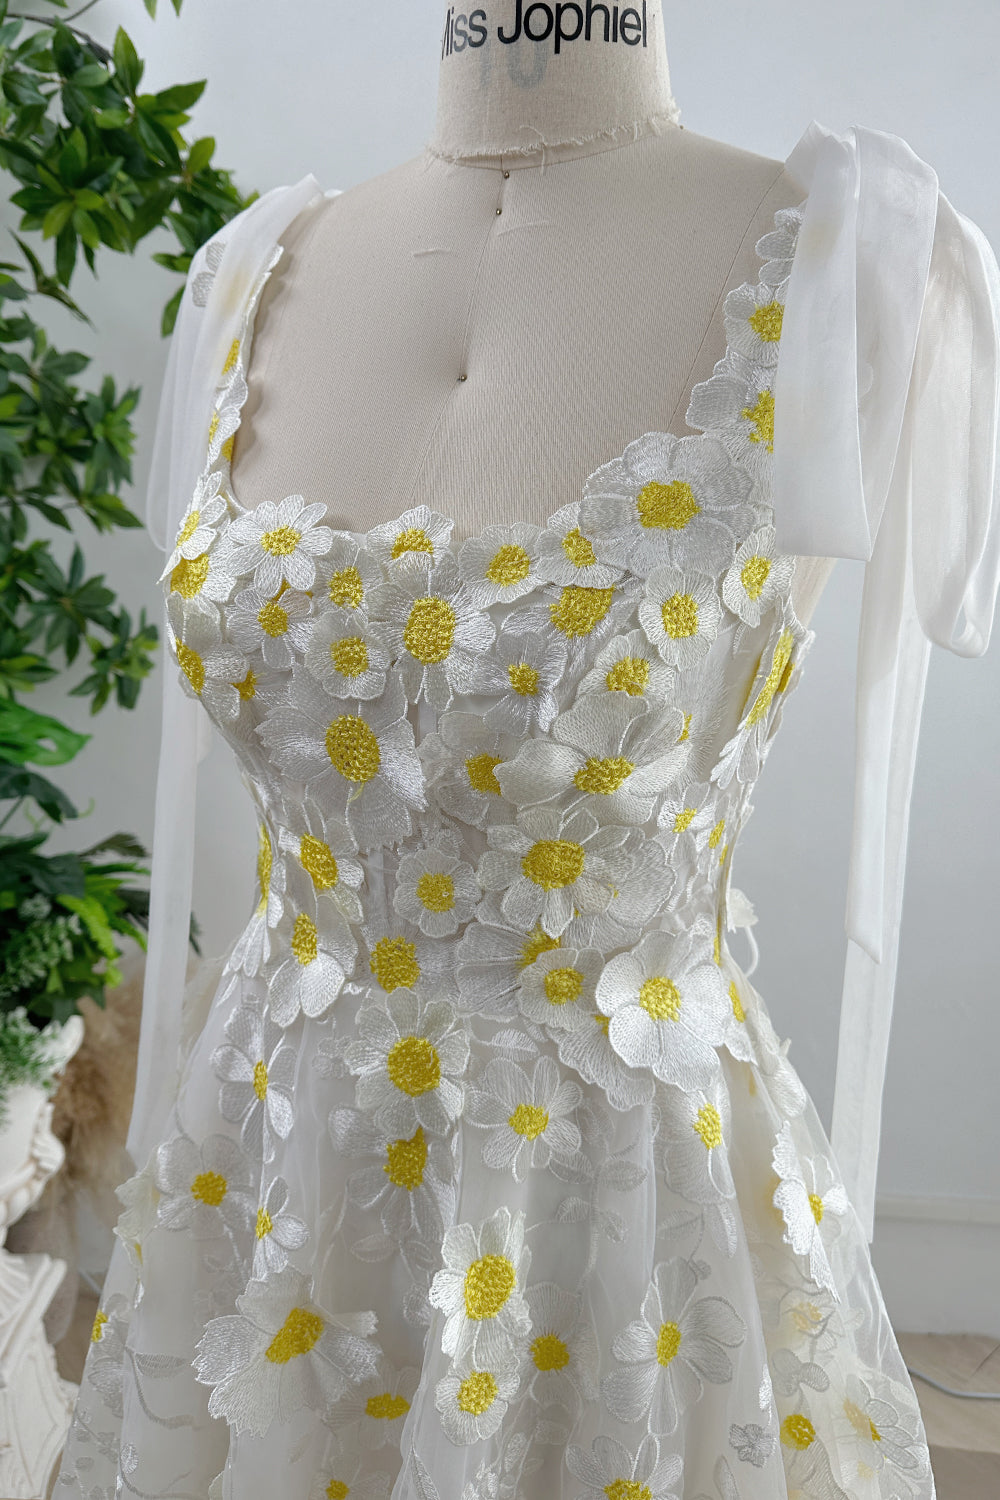 Scoop Neck 3D Floral Dress with Tie Straps